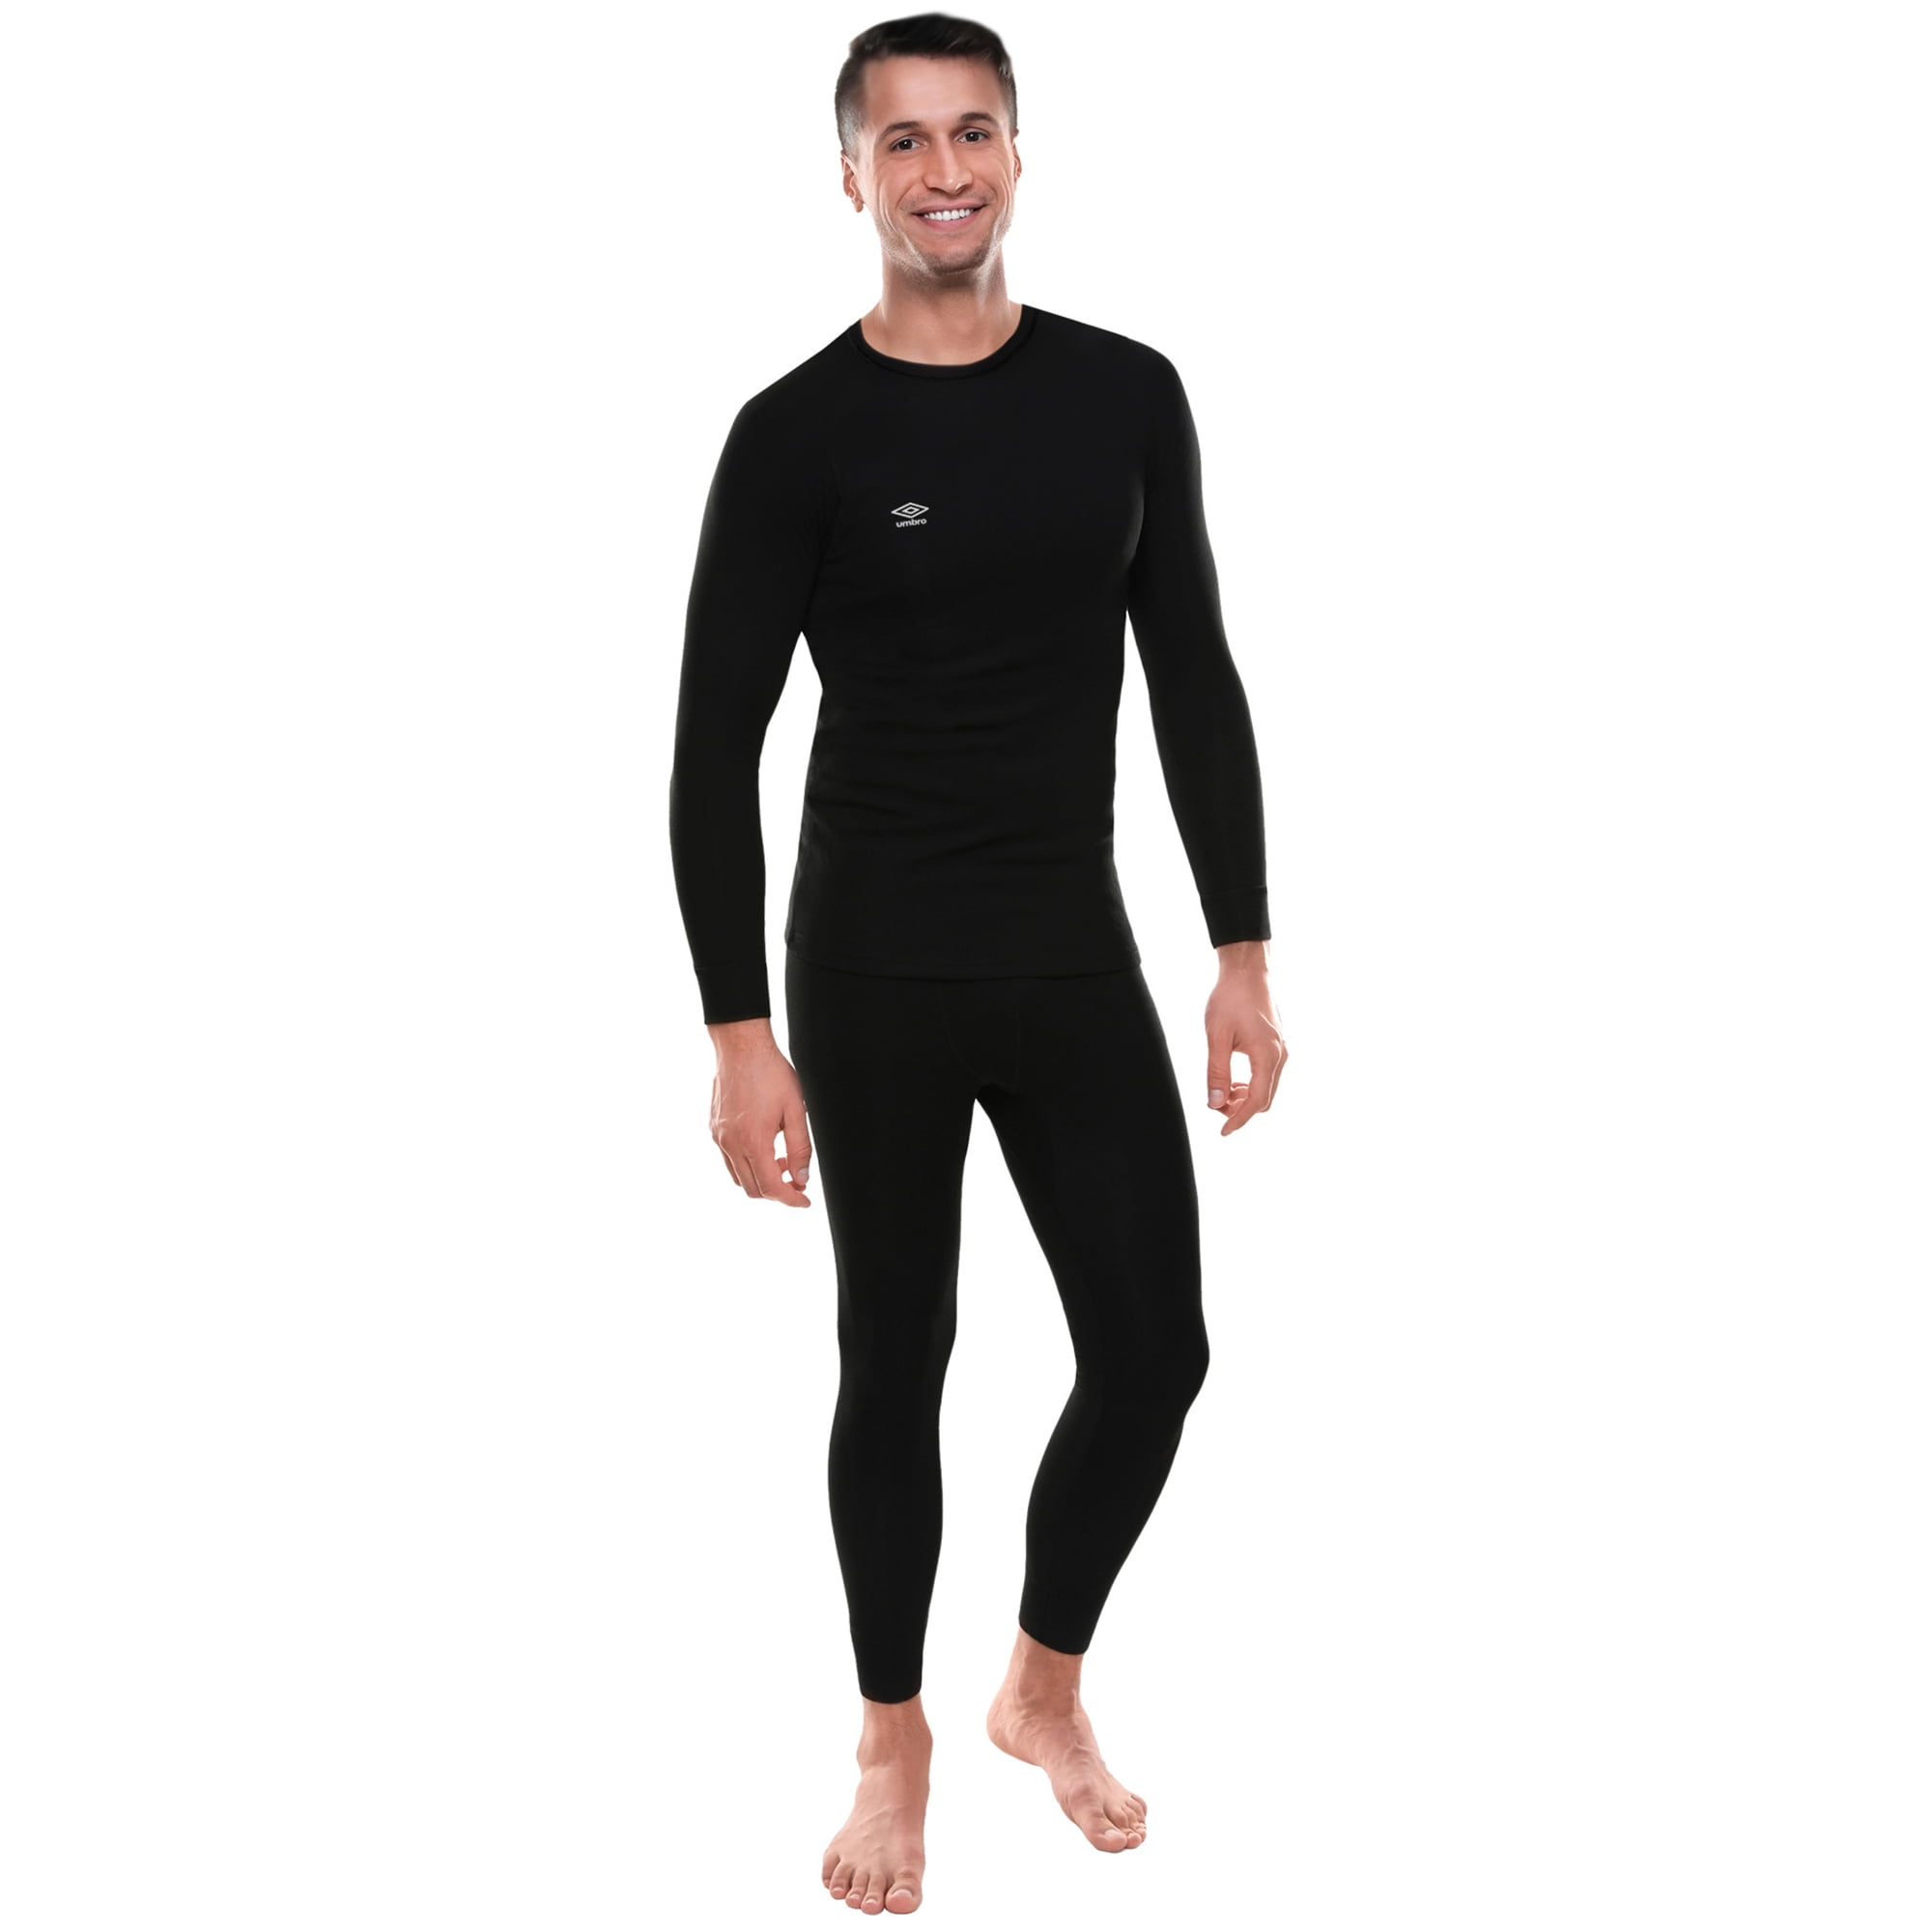 Umbro Men’s Base Layer Thermal Compression Pants & Shirt Set (S-XL, Various) $6.80  + Free S&H w/ Walmart+ or $35+